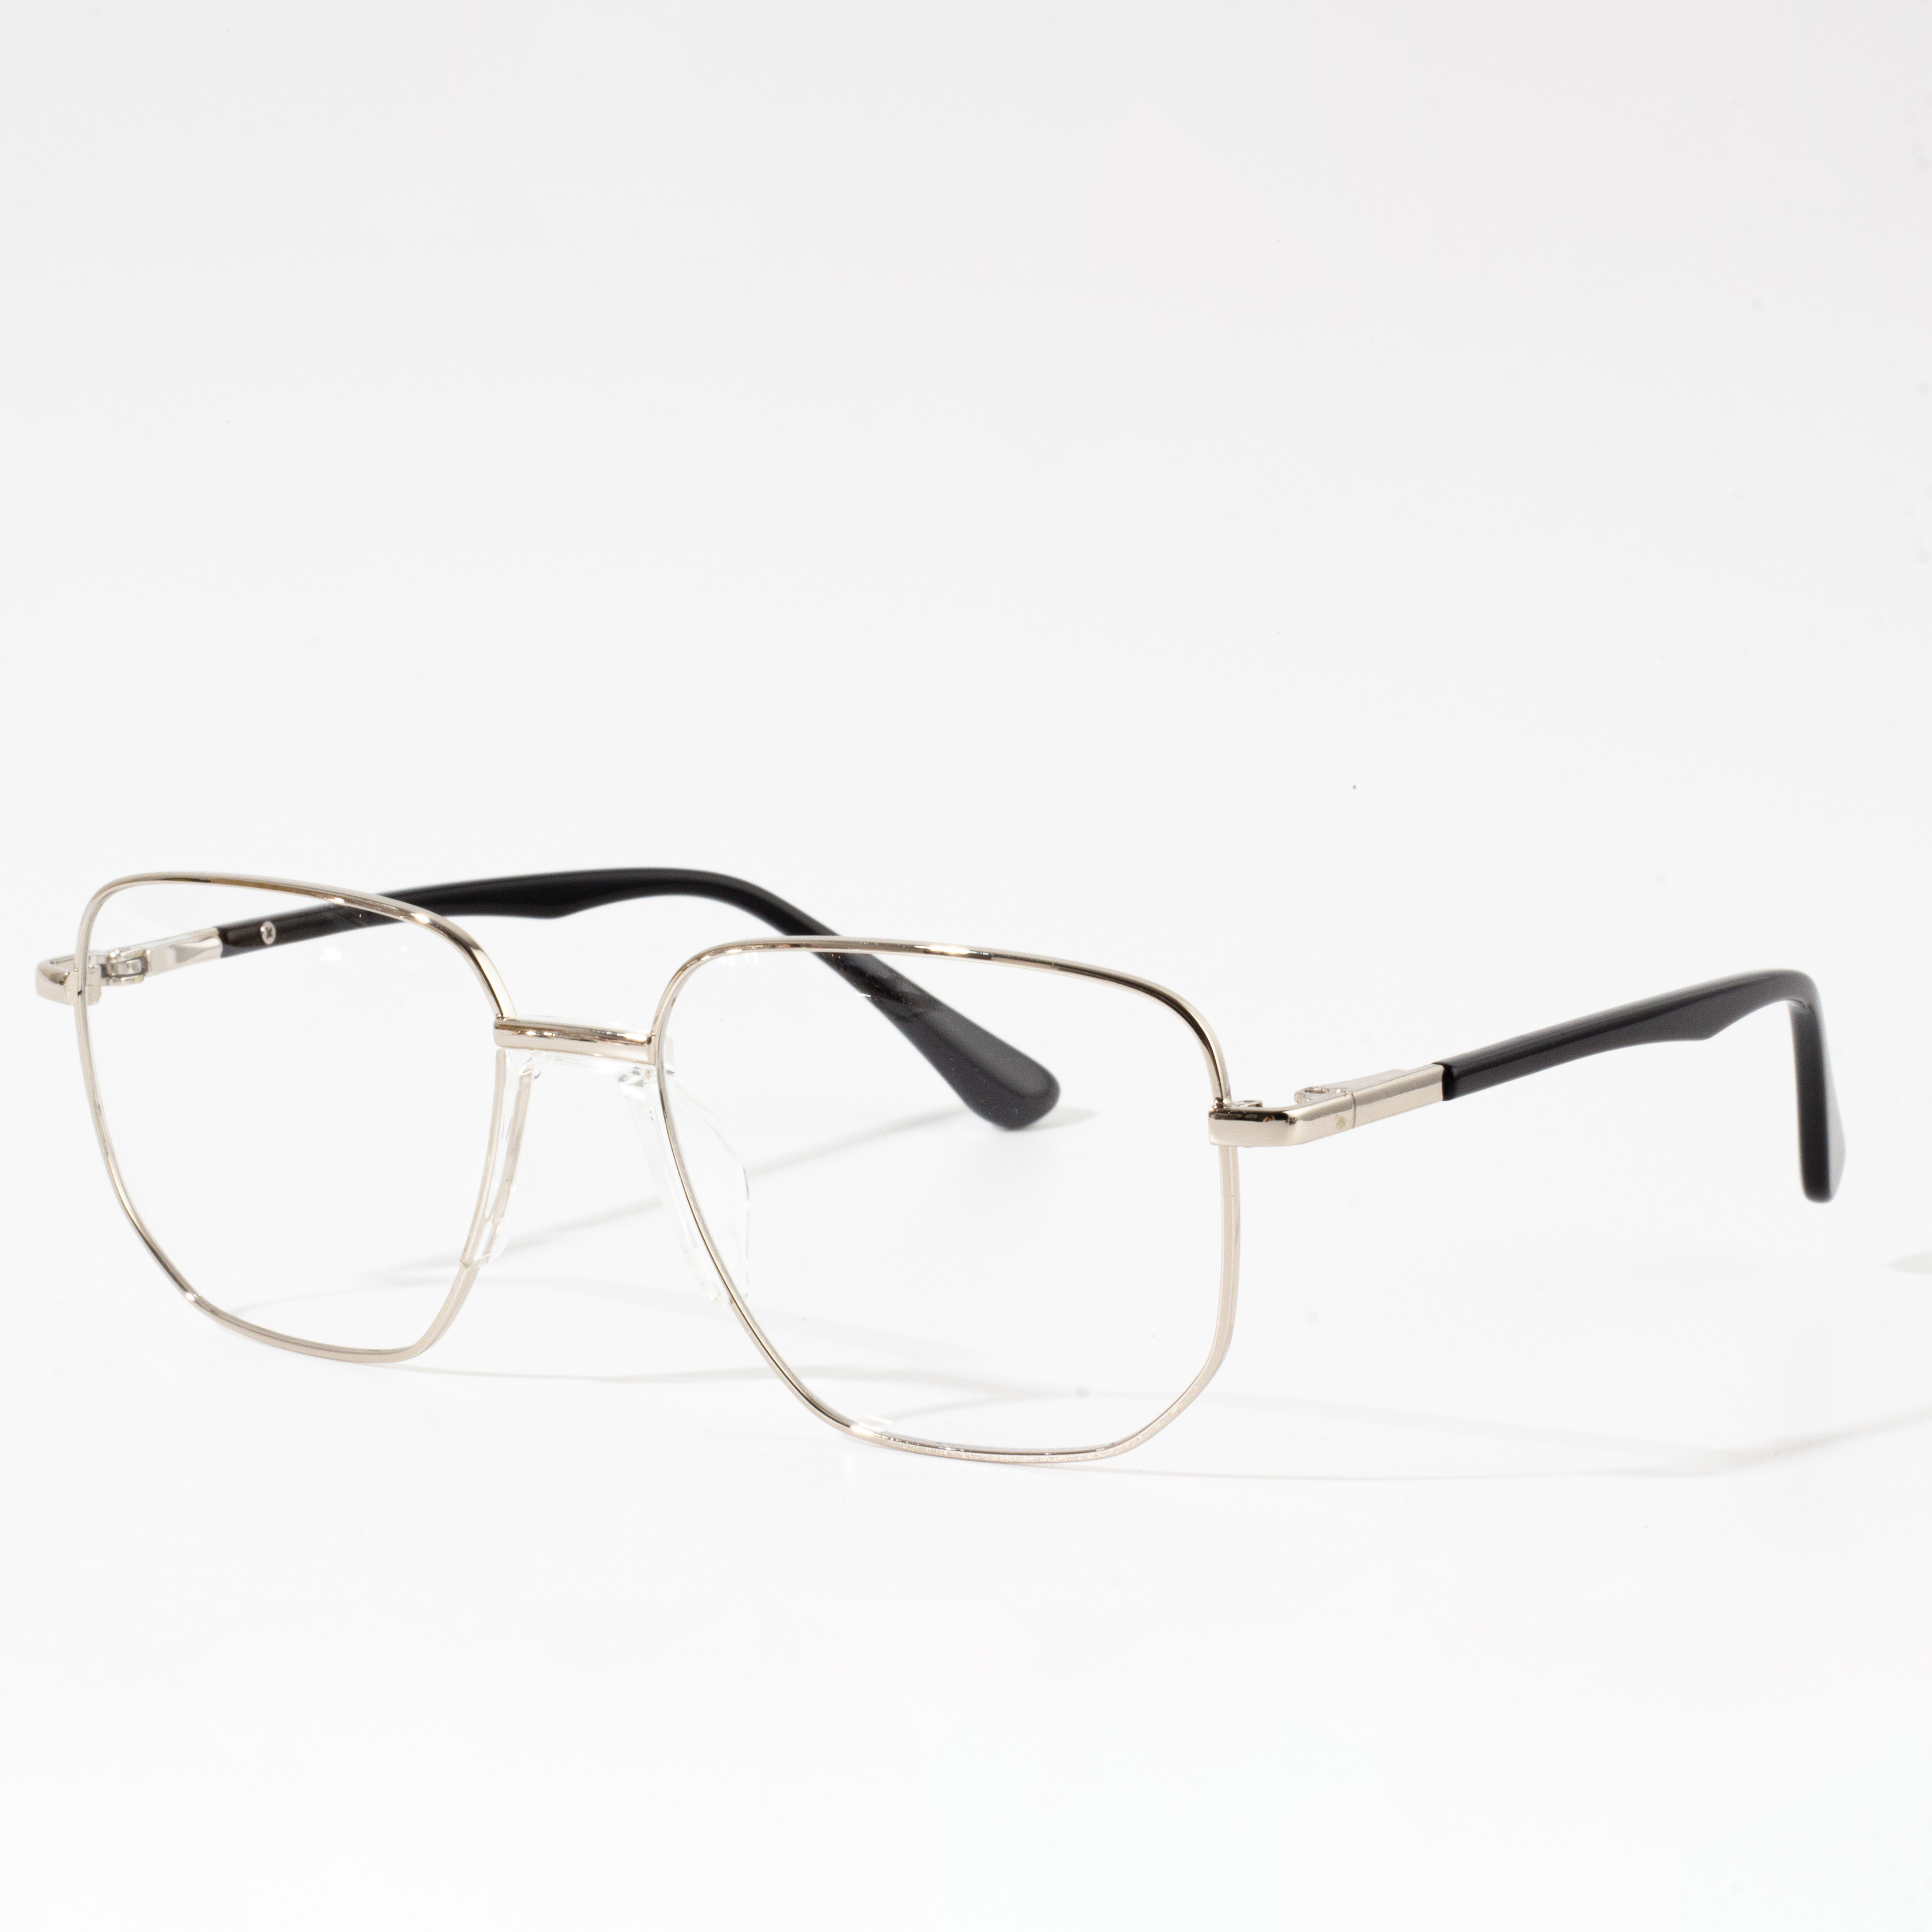 Titanium Glasses Frame (7)